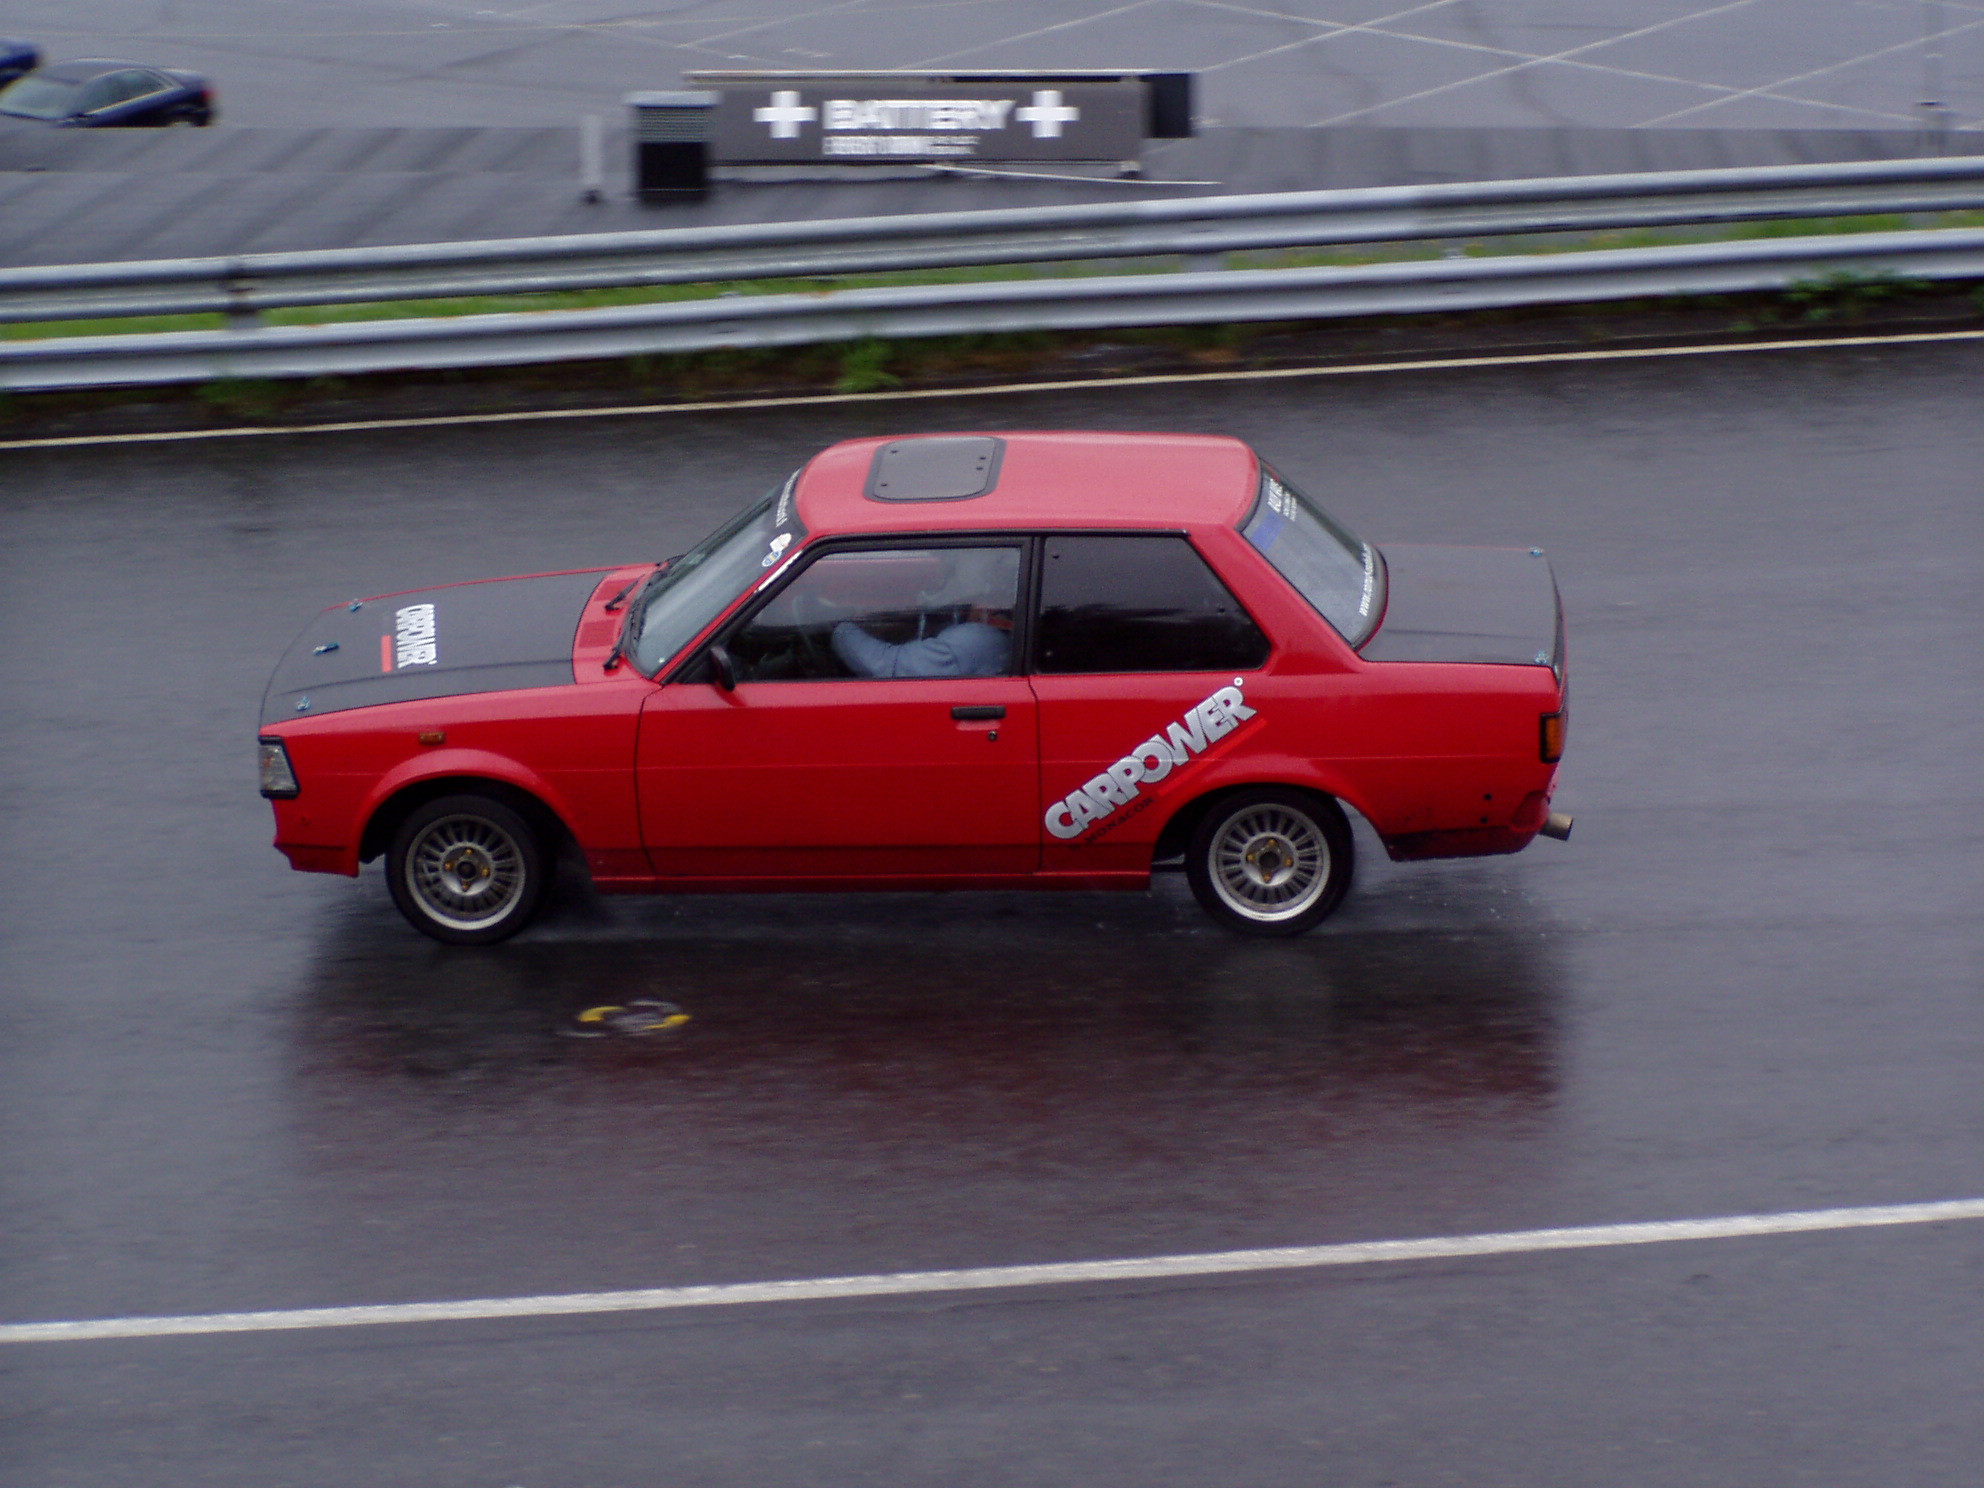 X-Treme ratapÃ¤ivÃ¤ 3.6.2006 Ahvenisto, Punainen DX-Corolla Ahveniston radalla sateella